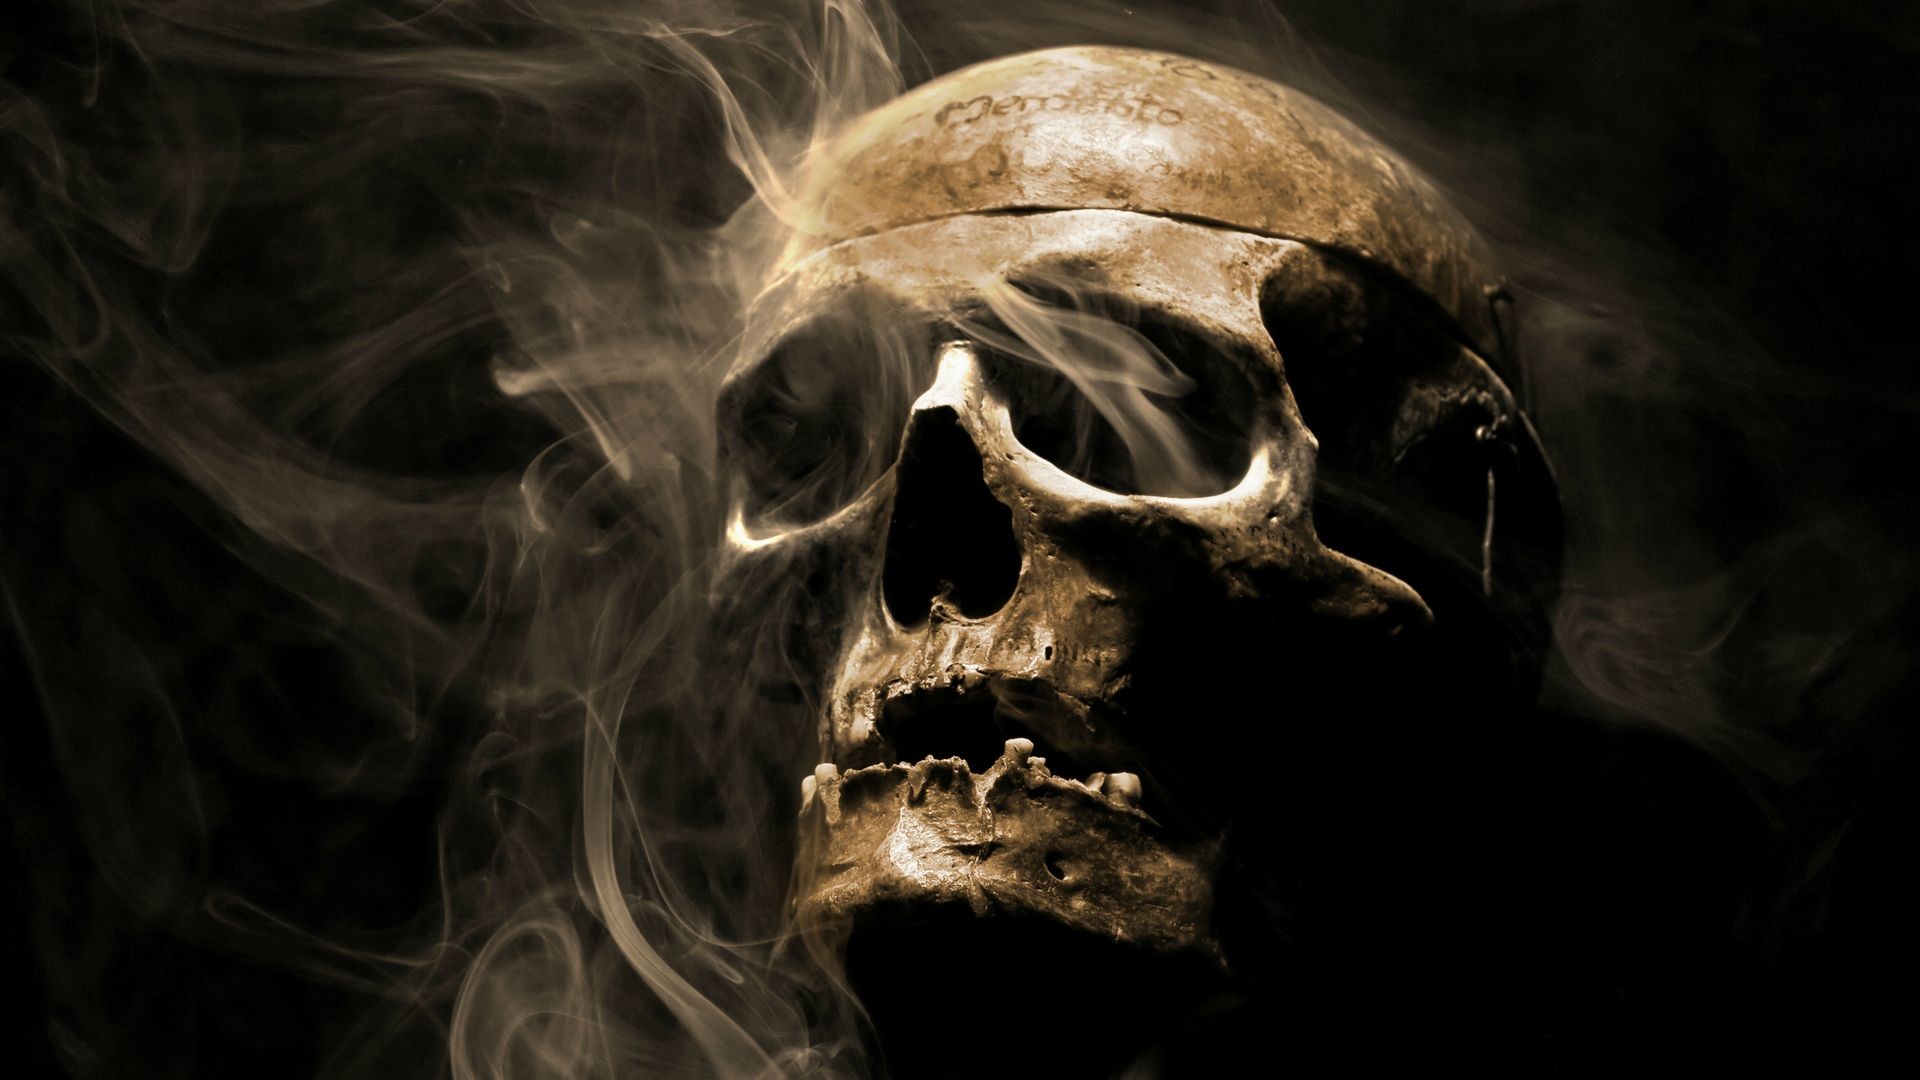 Dangerous Hd Wallpaper Smoke Skull 57 Images